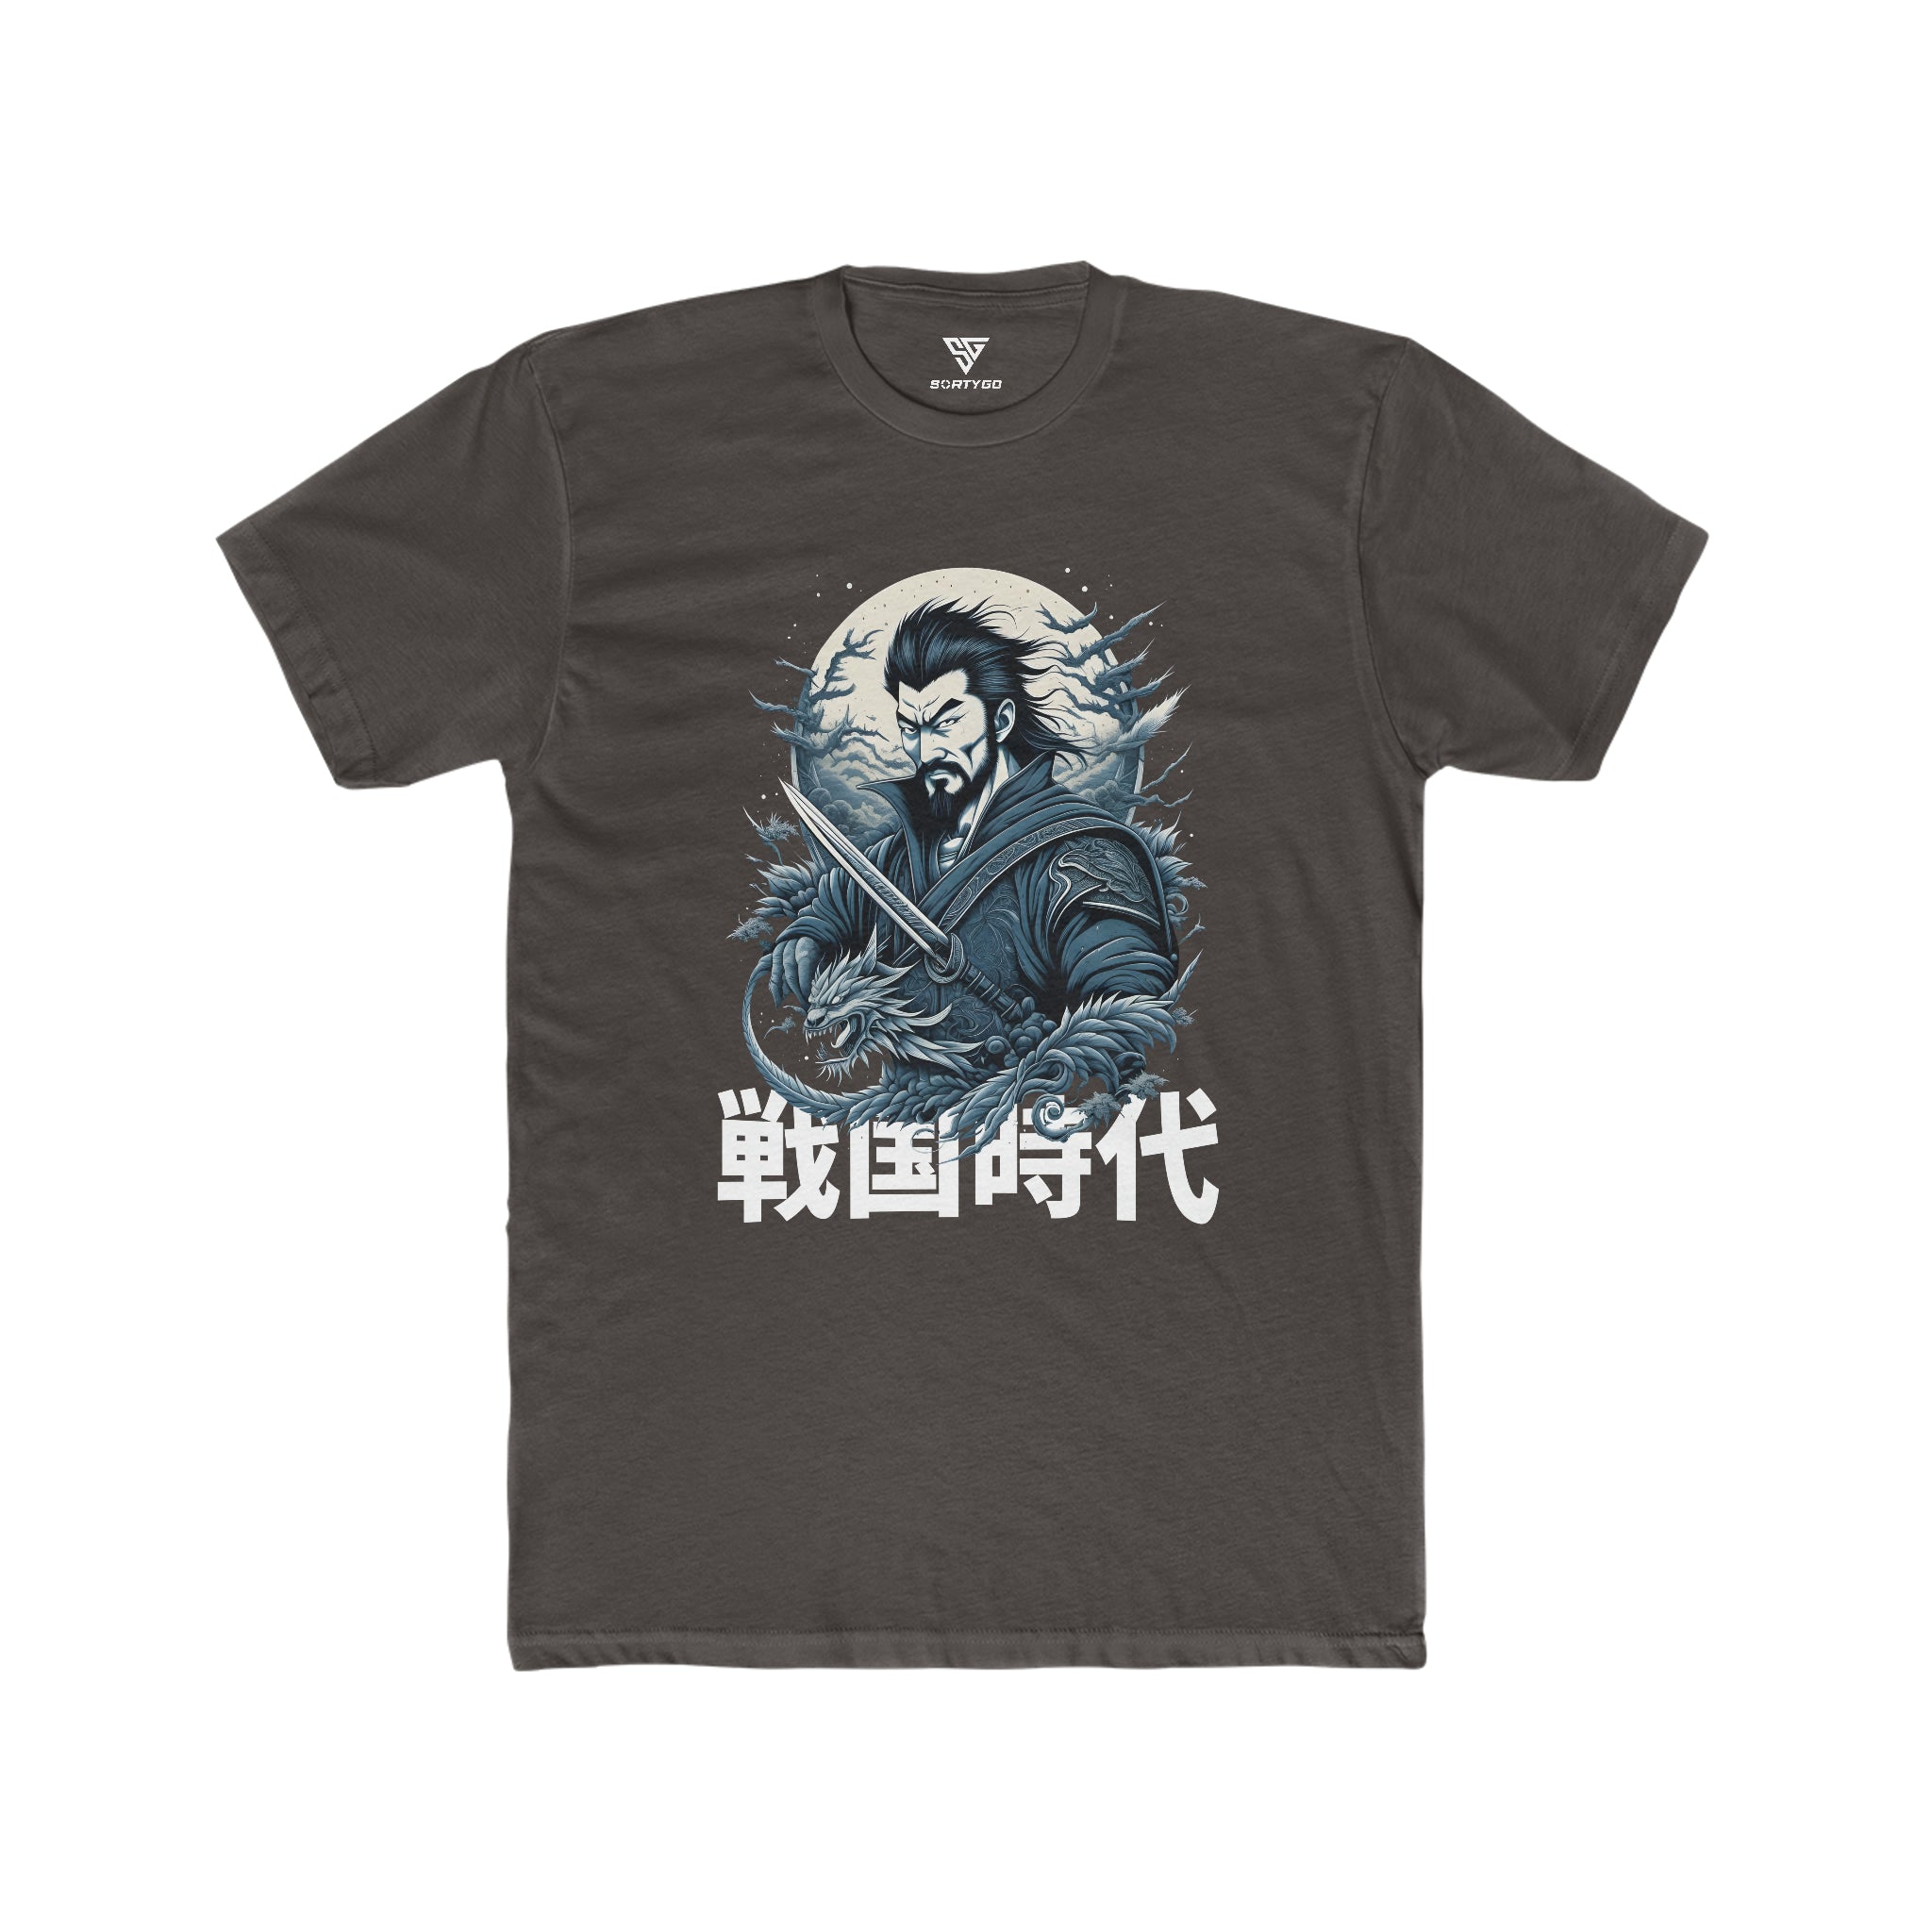 SORTYGO - Japanese Warrior Men Fitted T-Shirt in Solid Dark Chocolate